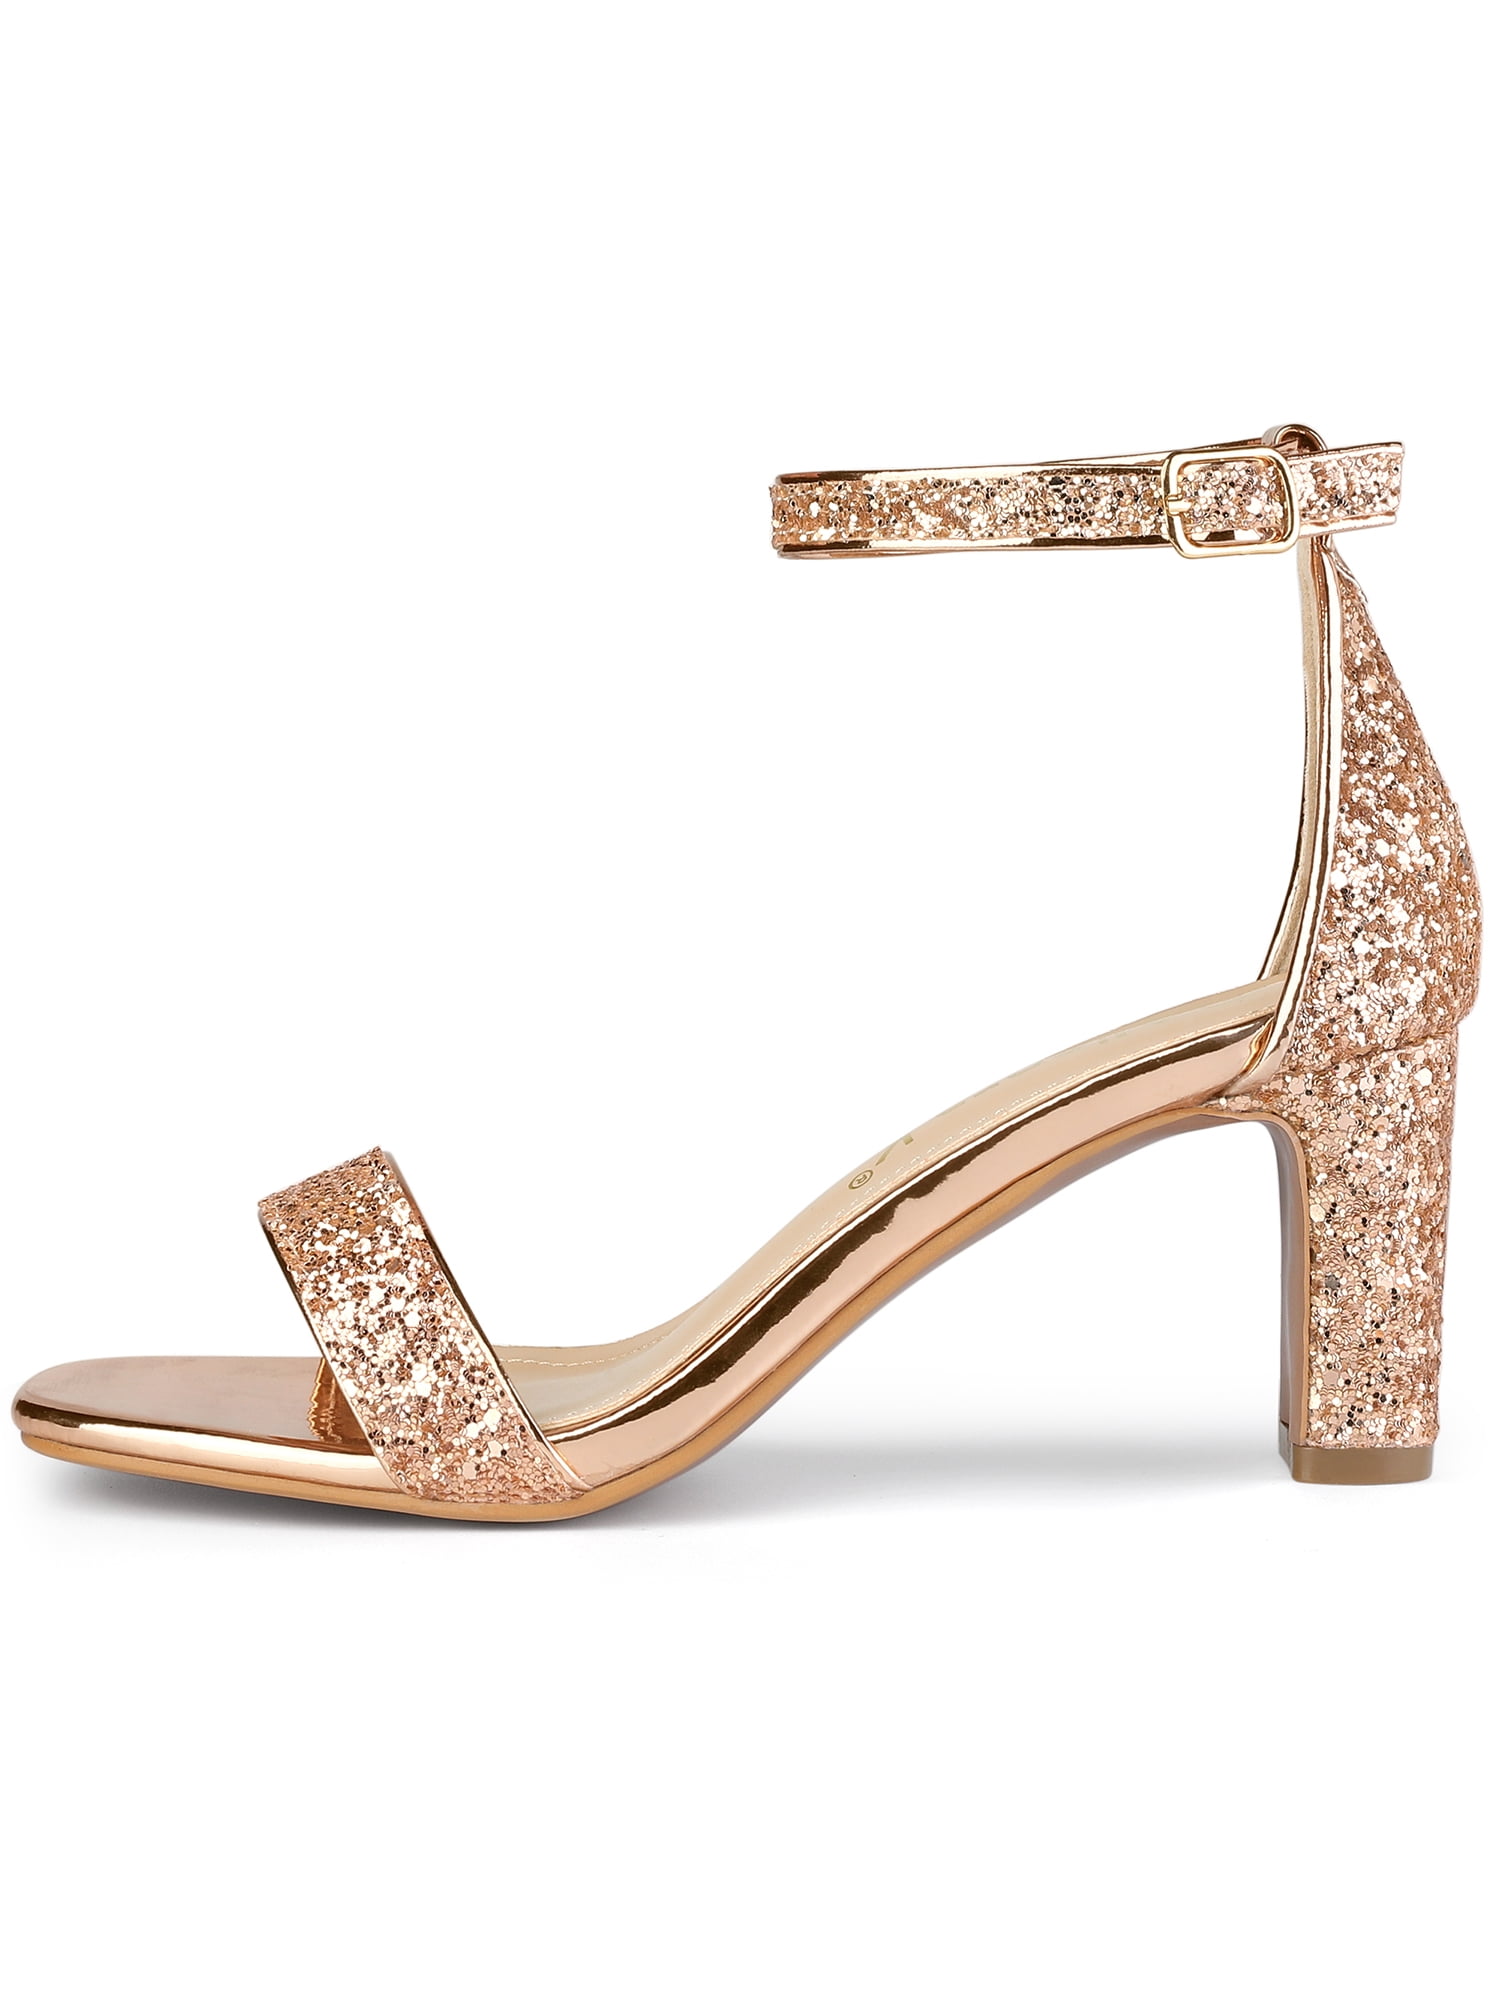 Silver Rhinestones Open Toe High Heels | Shoes heels prom, Heels, Prom heels